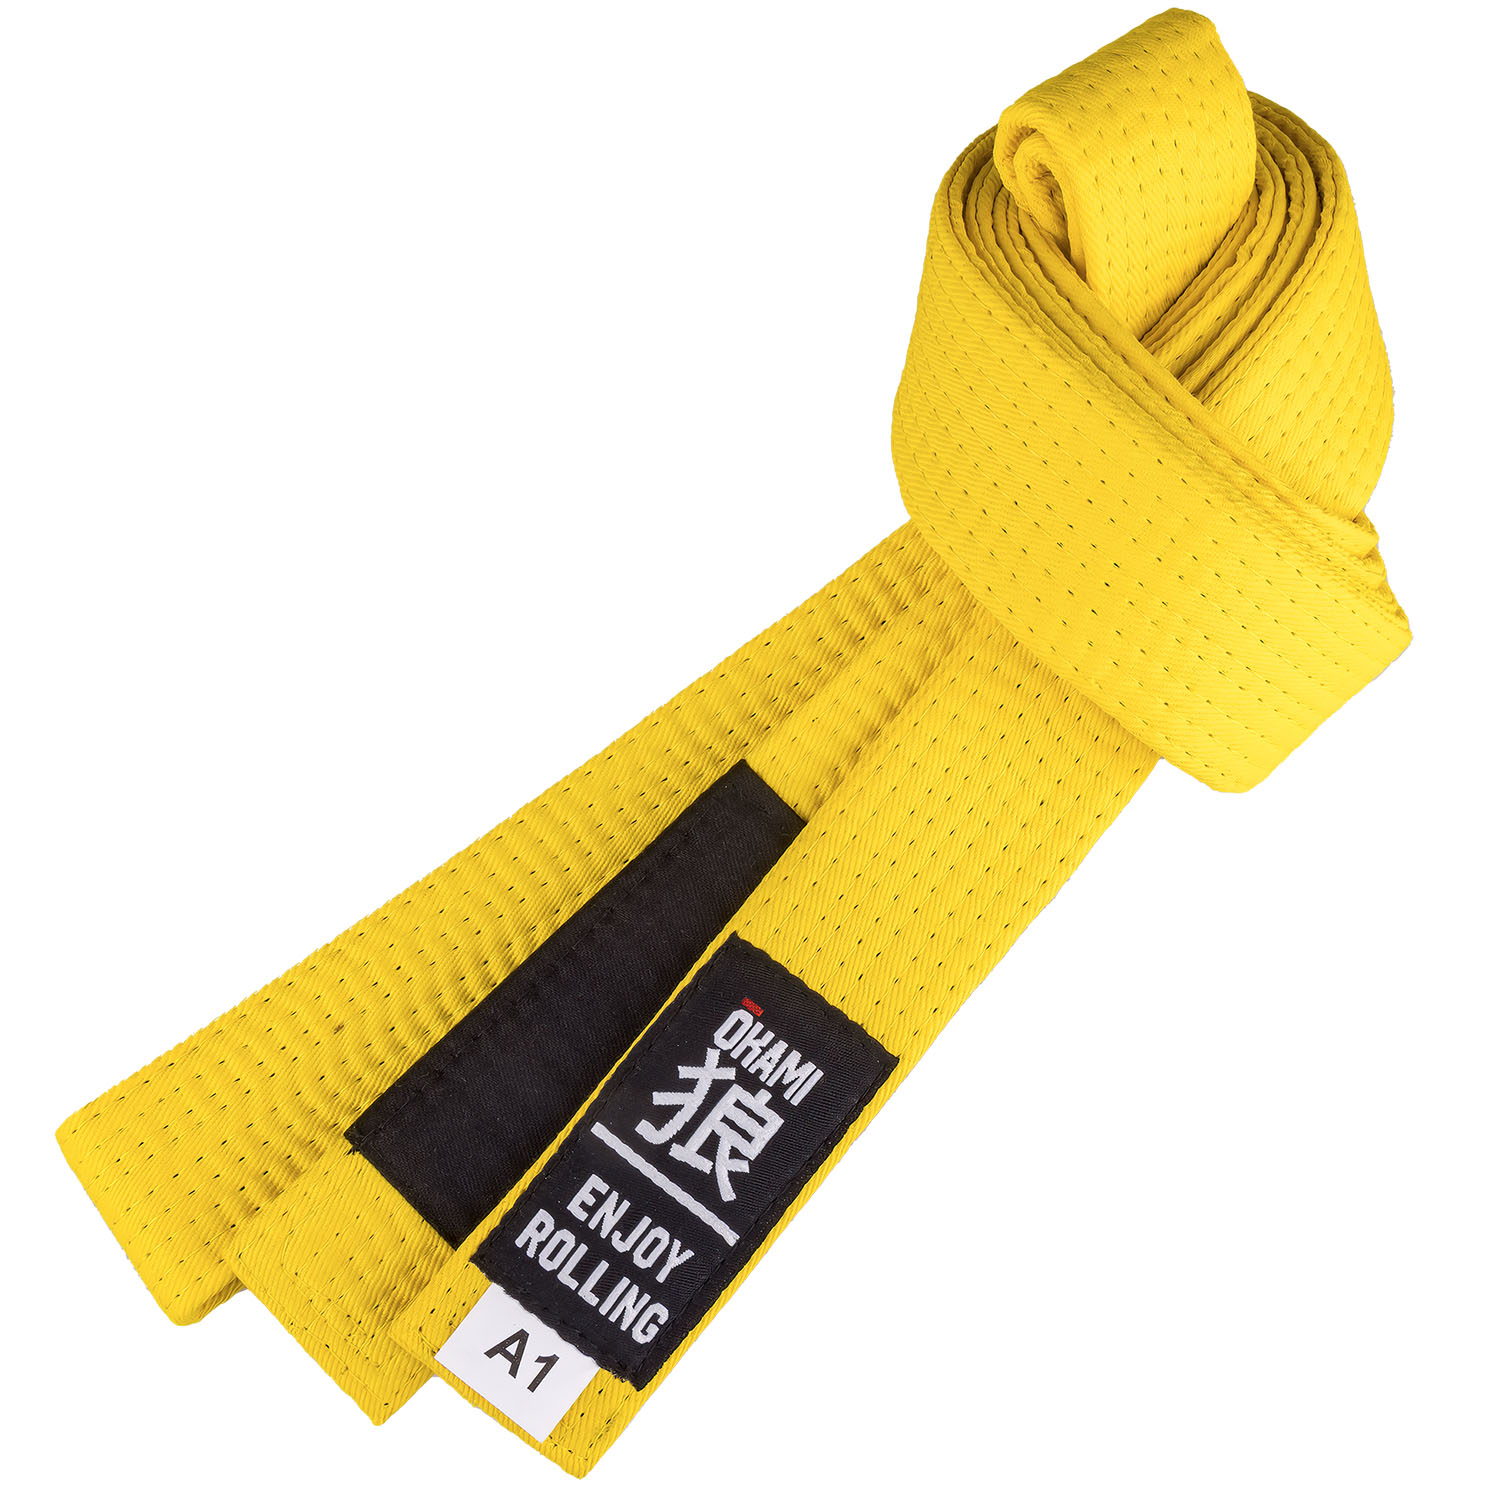 OKAMI BJJ Belt, Luta Livre, yellow